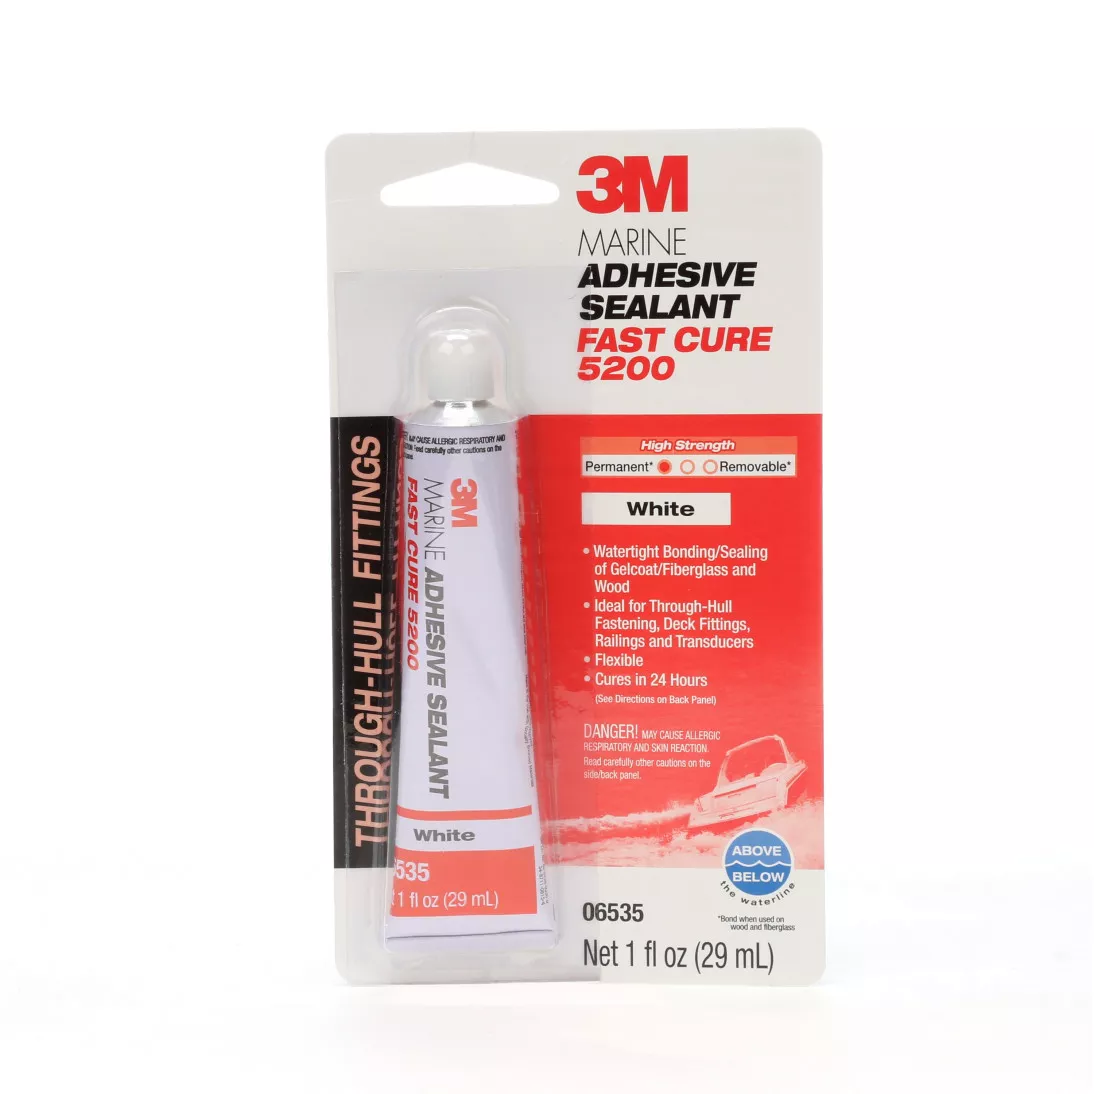 3M™ Marine Adhesive Sealant 5200FC Fast Cure, PN06535, White, 1 oz Tube,
12/Case